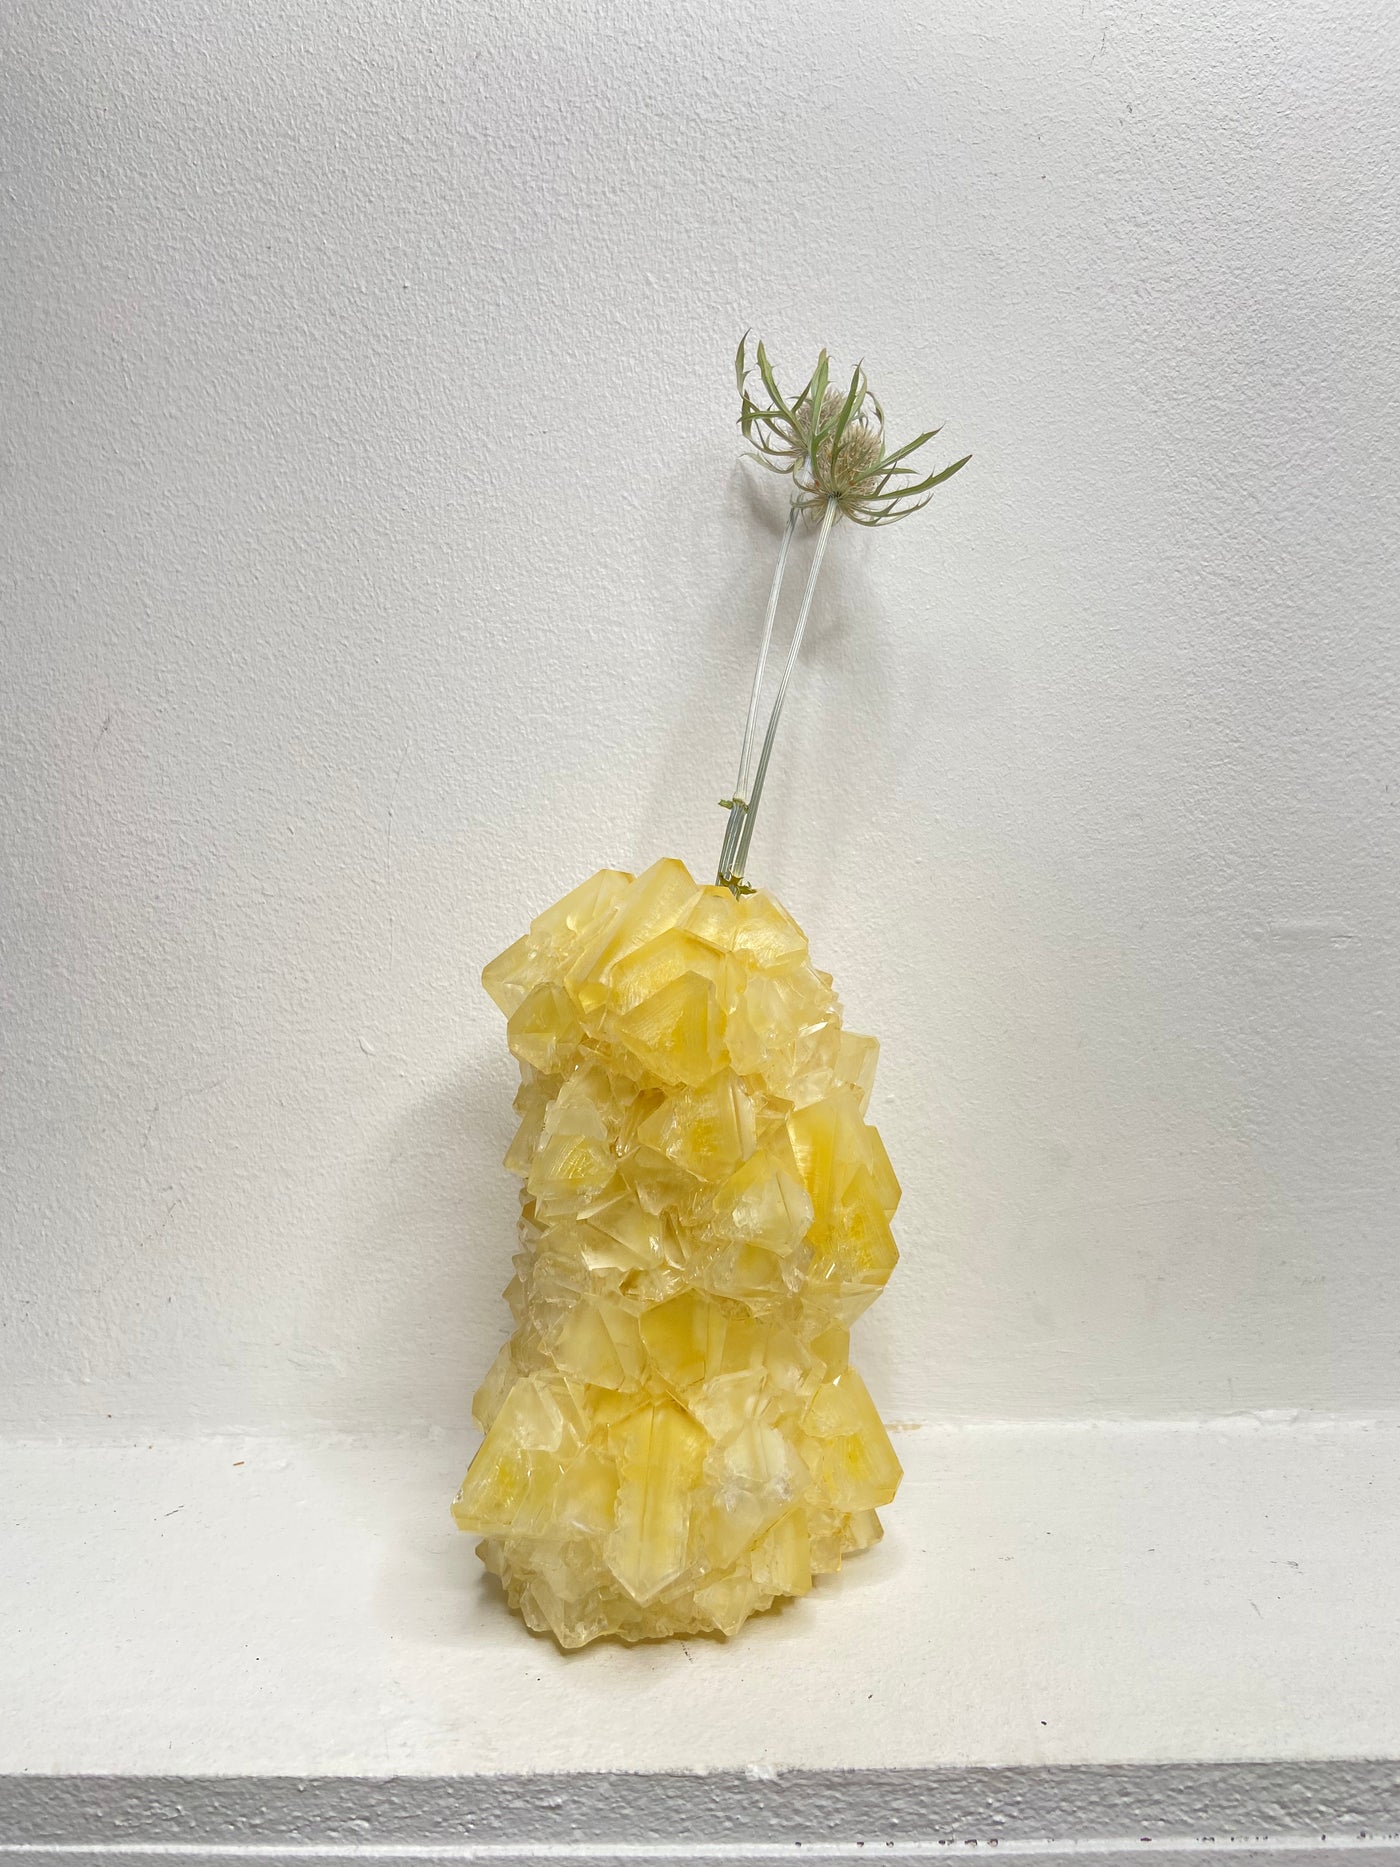 Chrystal vase mini gulur no3